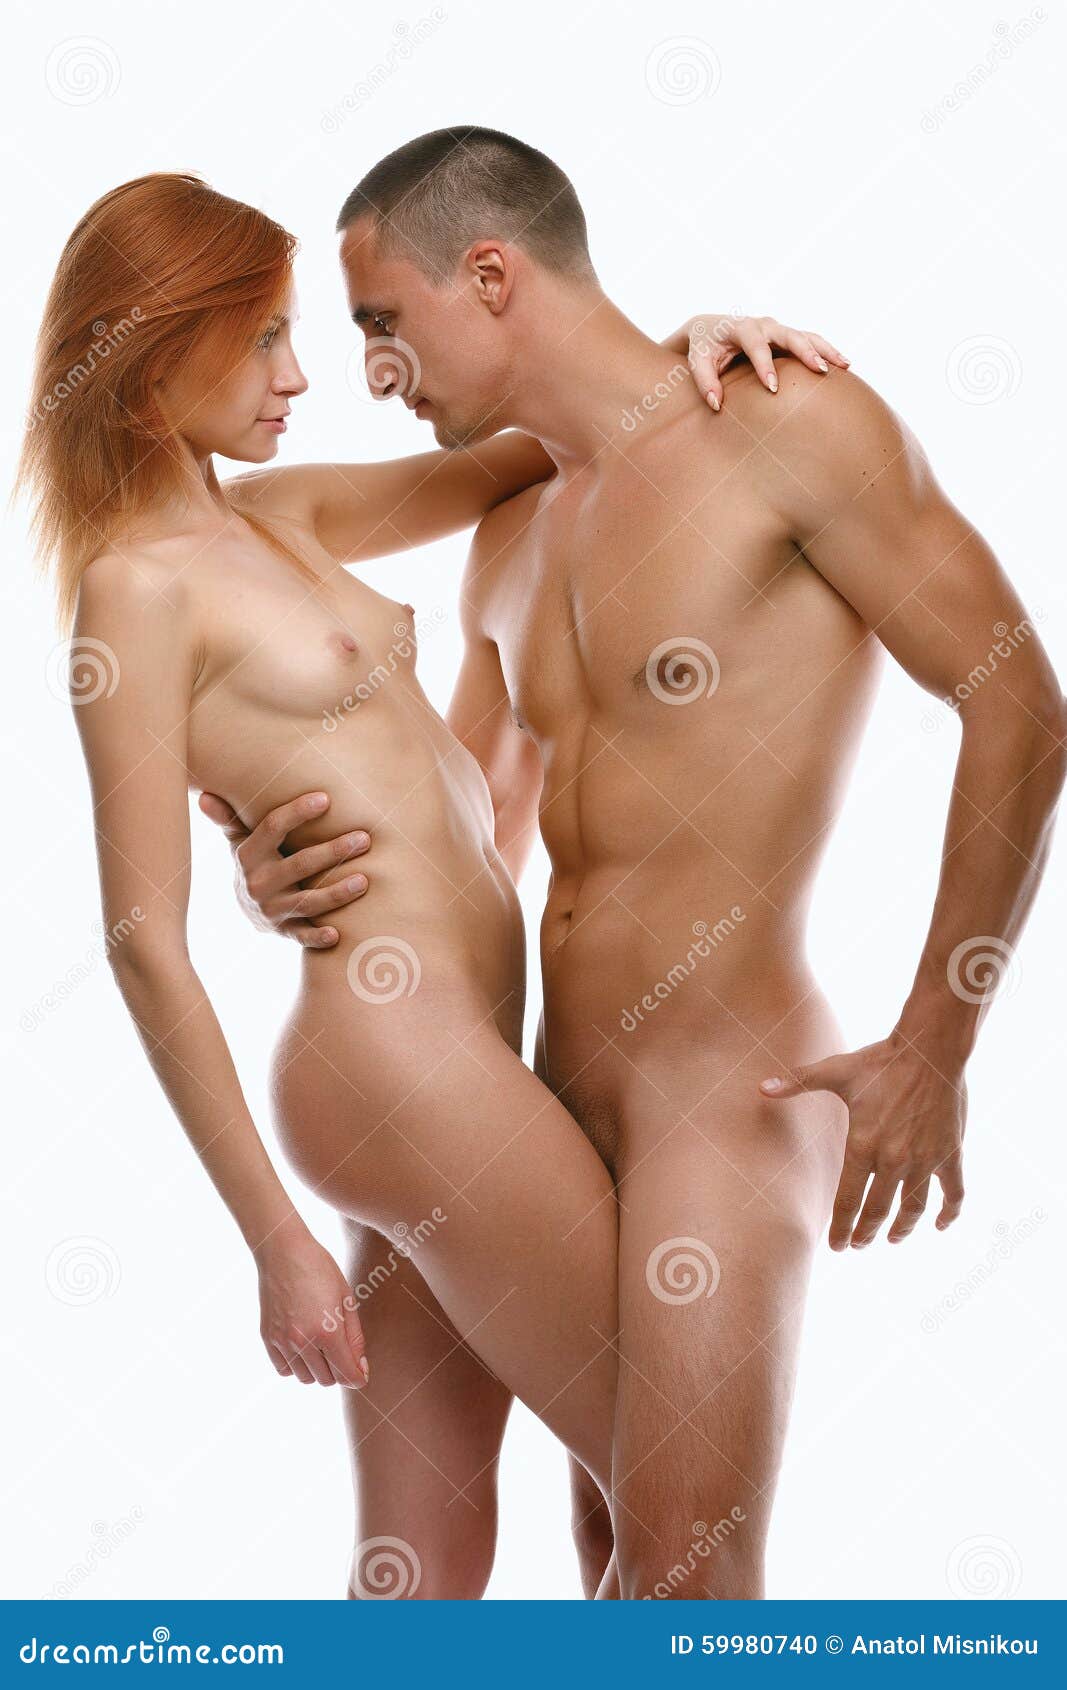 Hot nude love